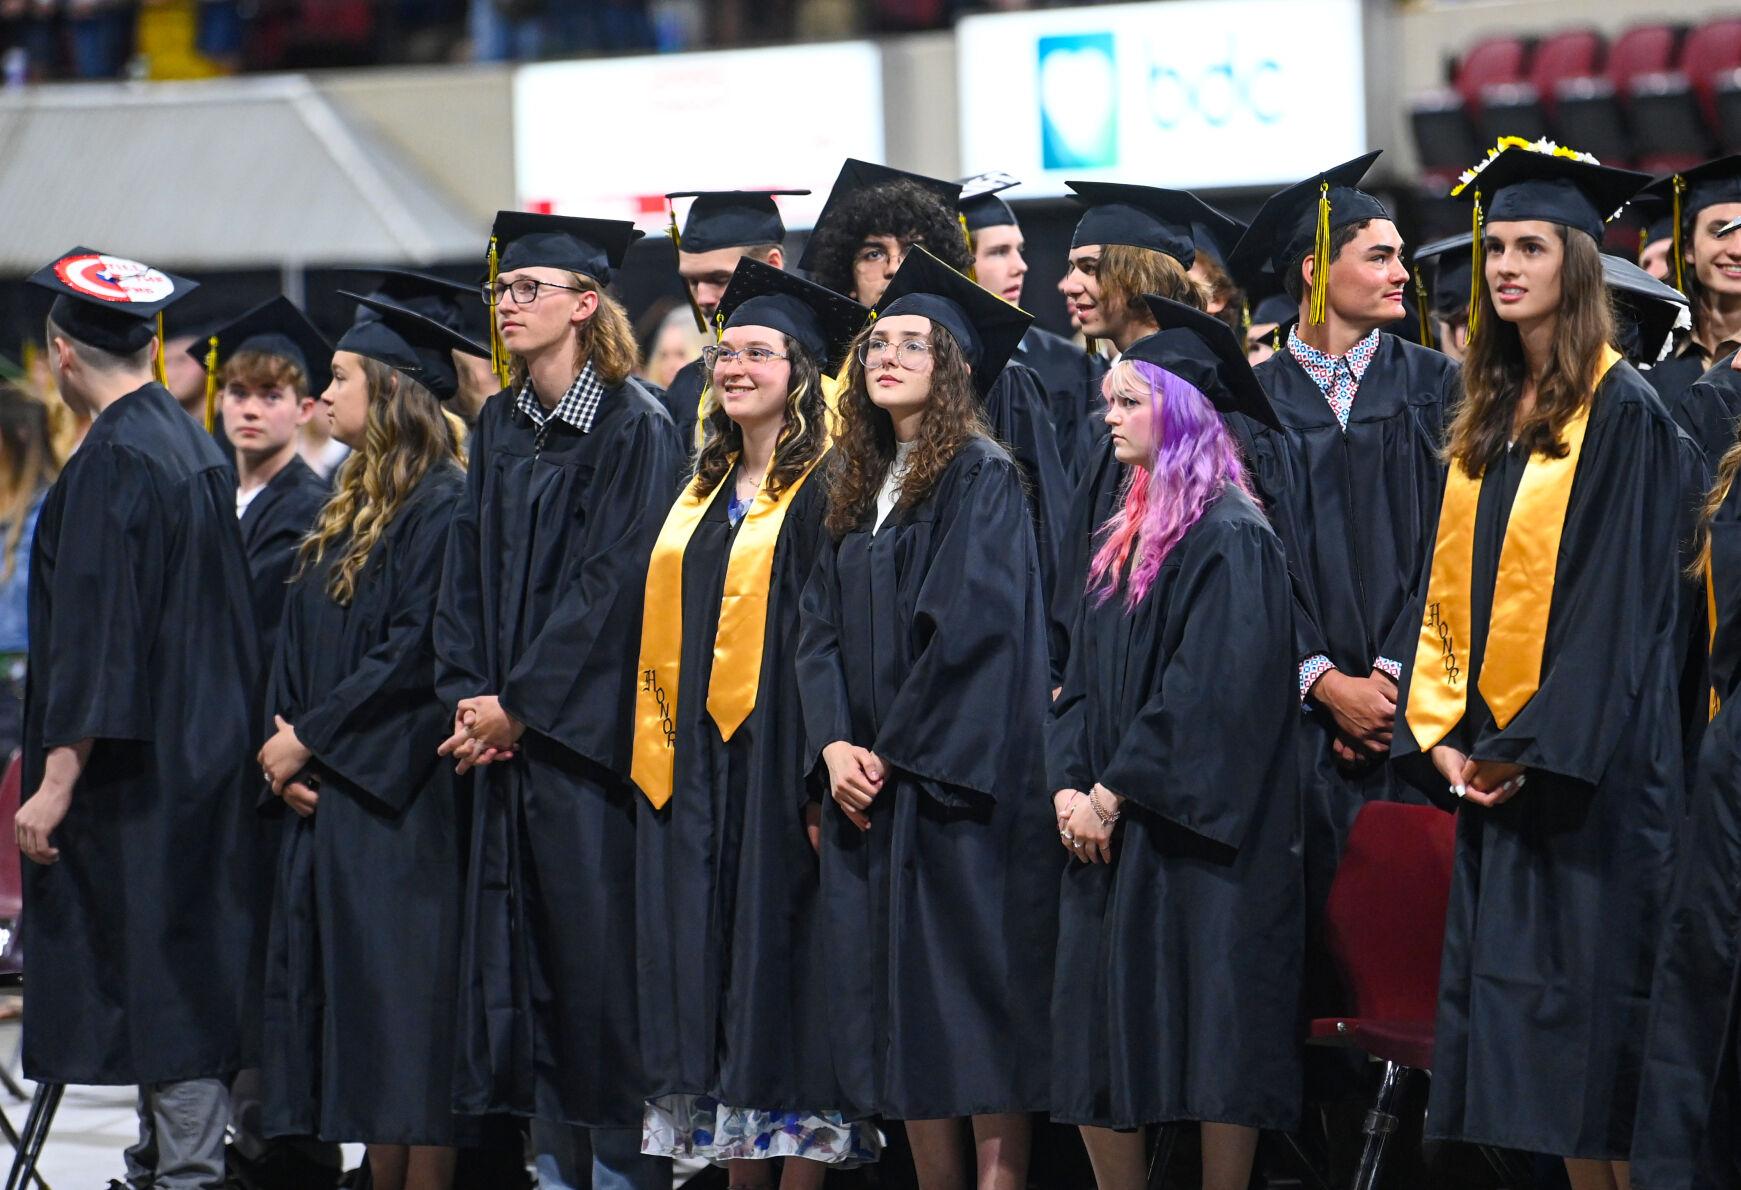 Photos Billings West High School celebrates 480 graduates at annual